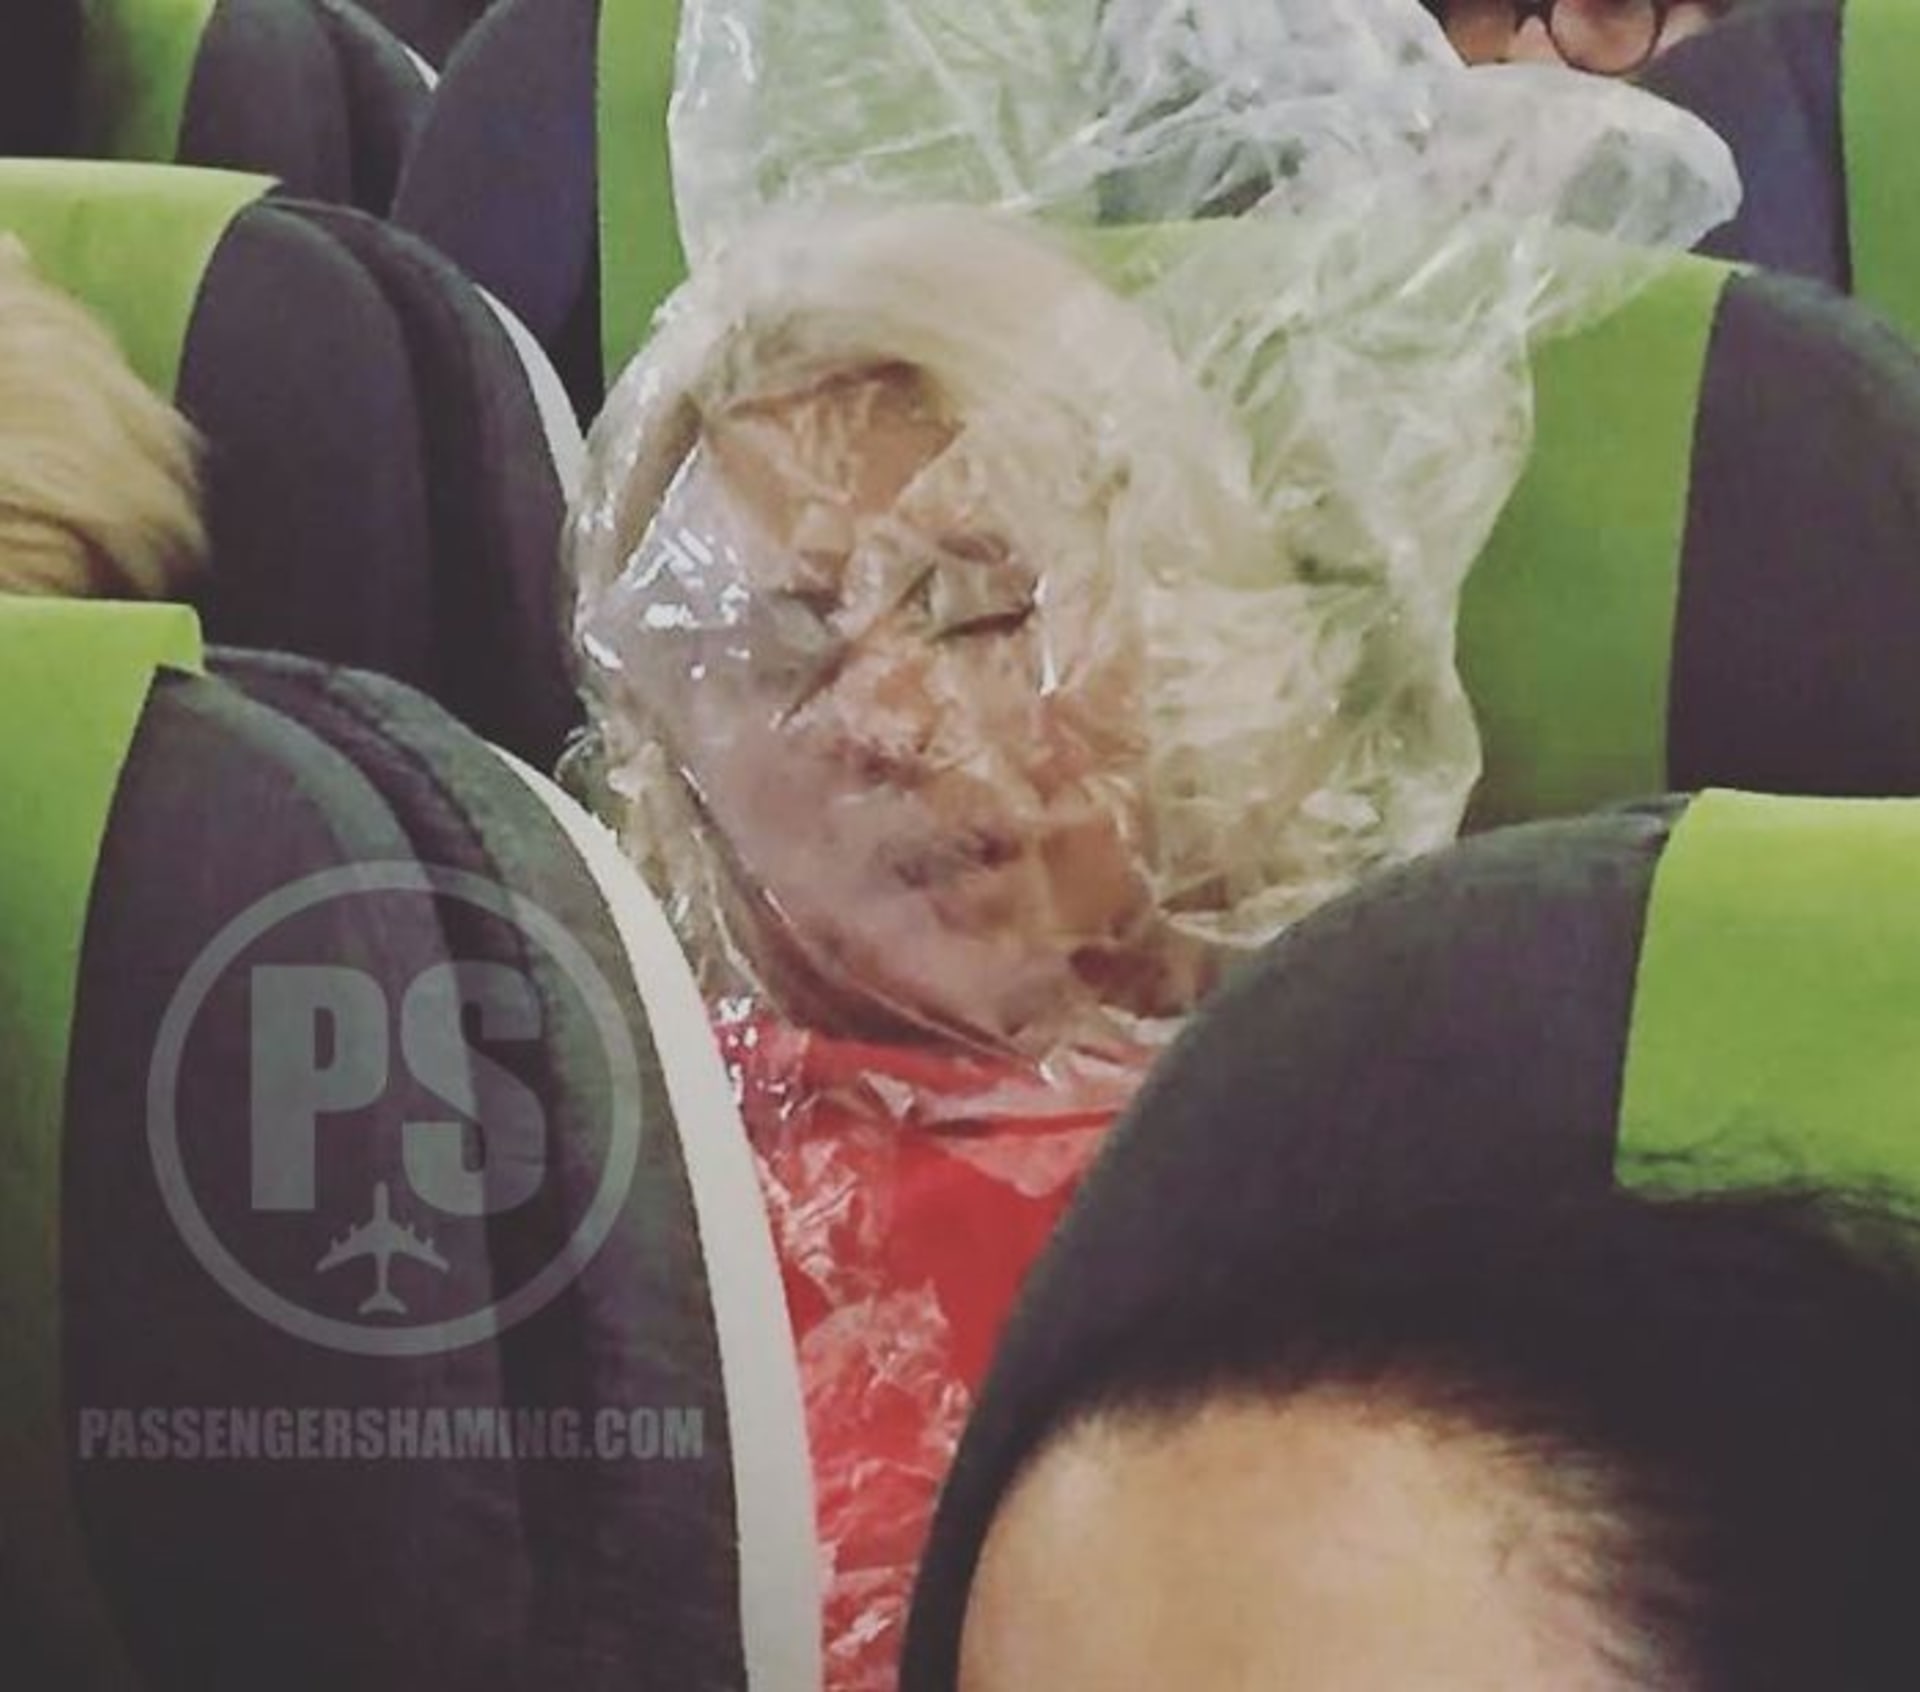 Passenger Shaming 20